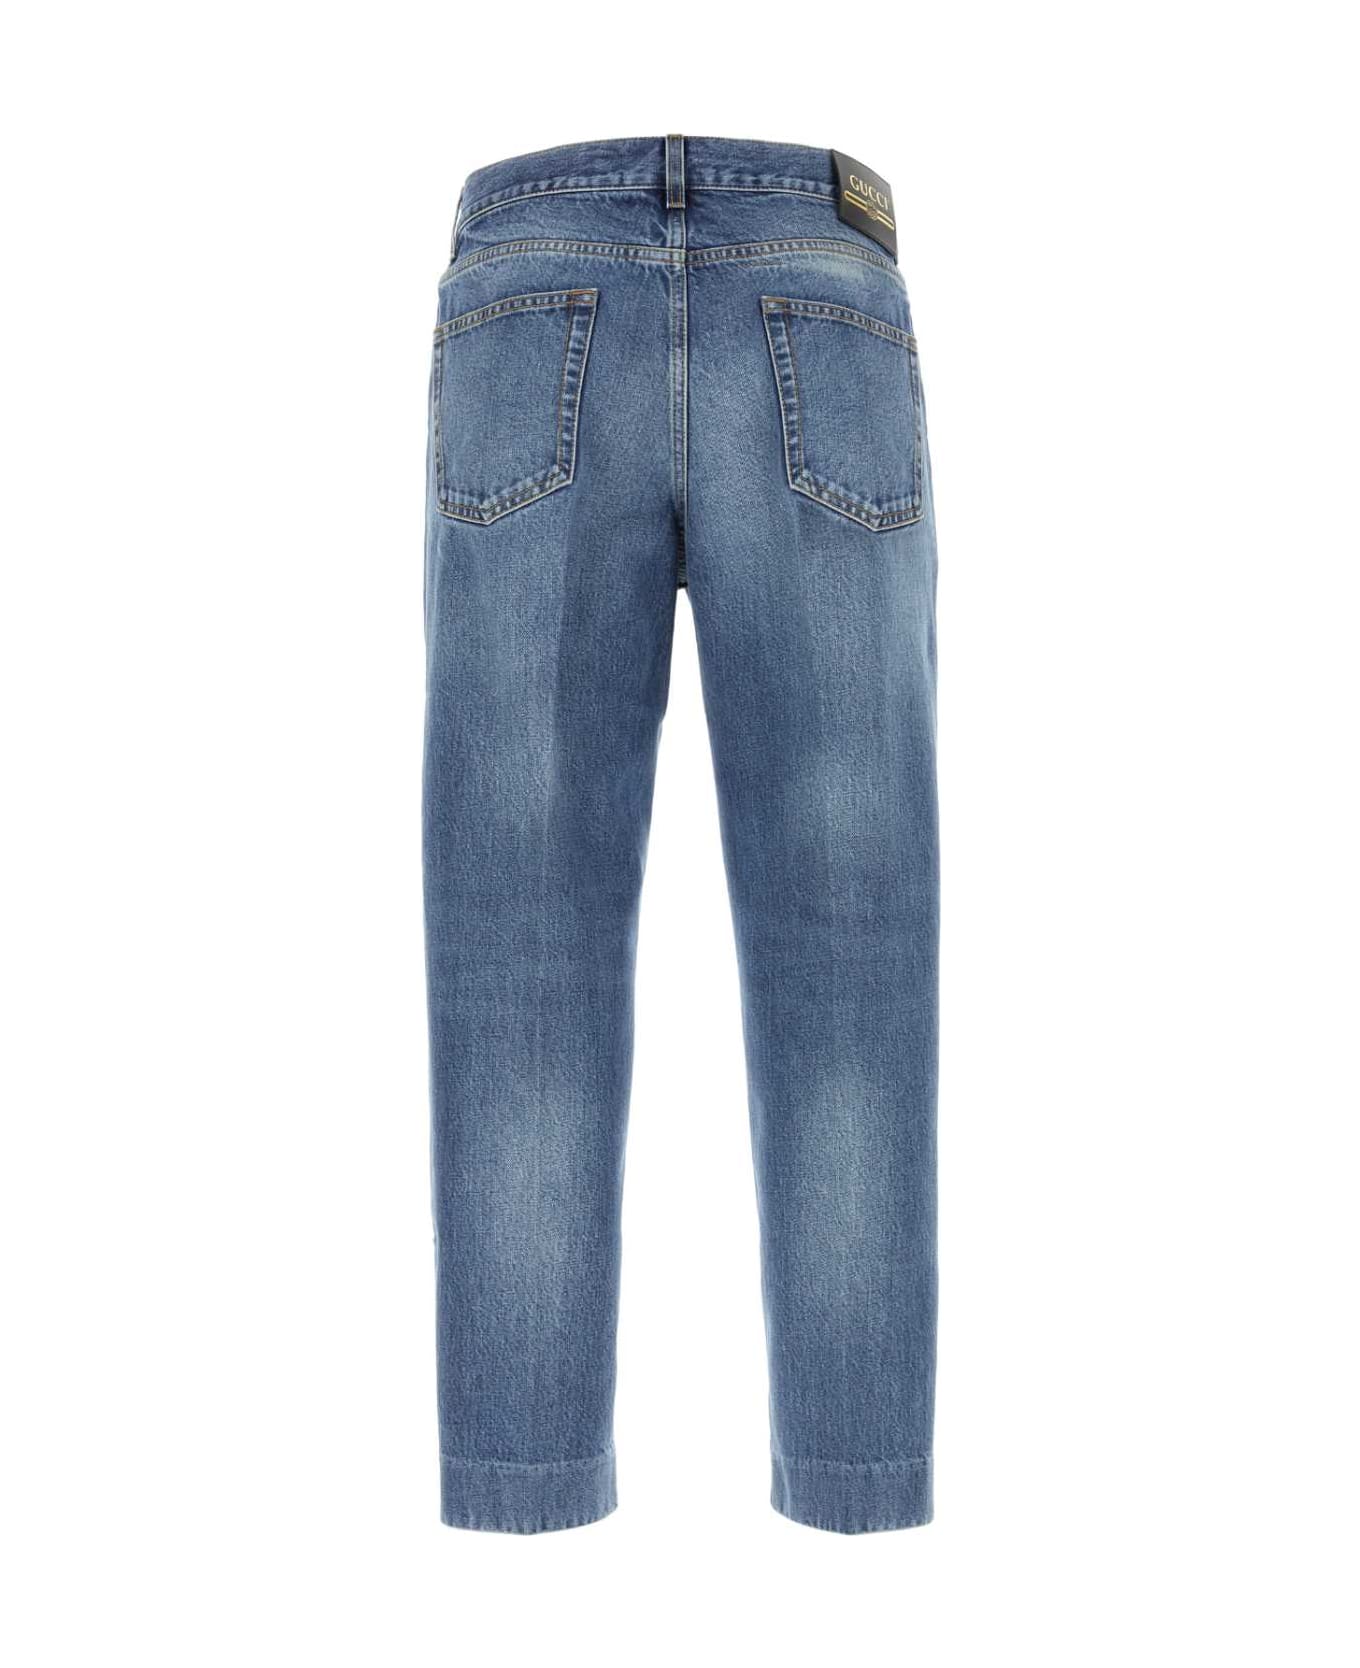 Gucci Denim Jeans - LIGHT BLUE